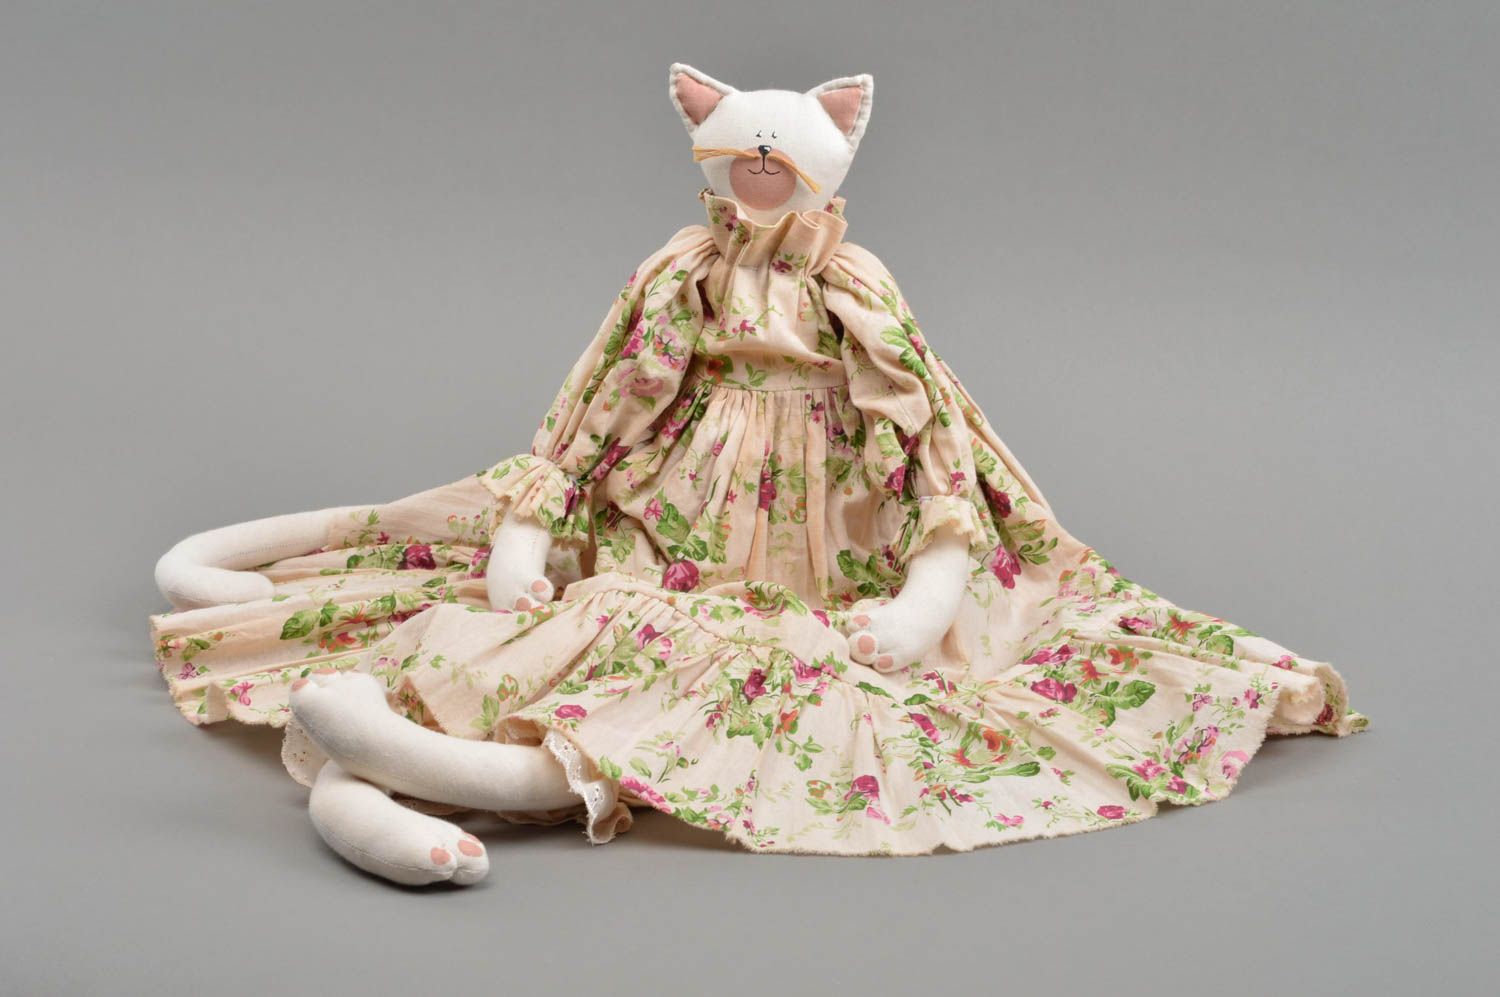 Fabric toy cat white stuffed toy doll in dress interior decor ideas nursery idea photo 3